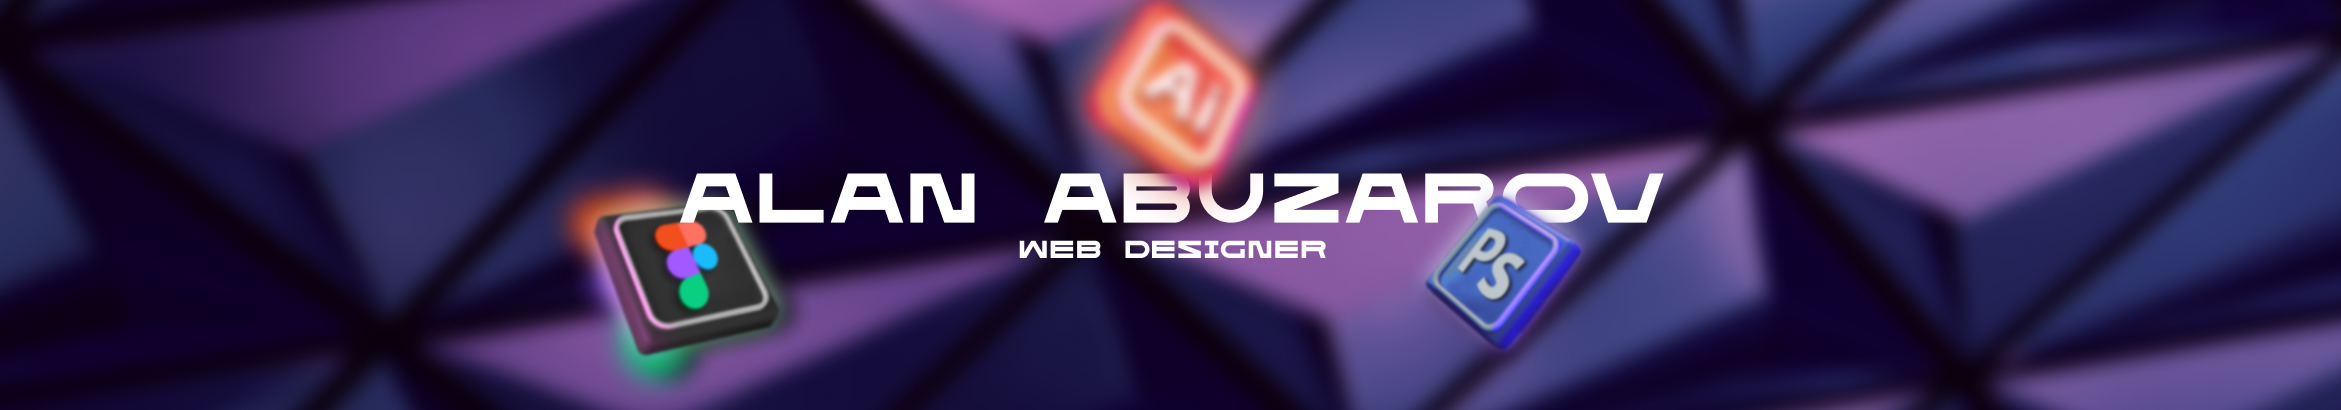 Alan Abuzarov's profile banner